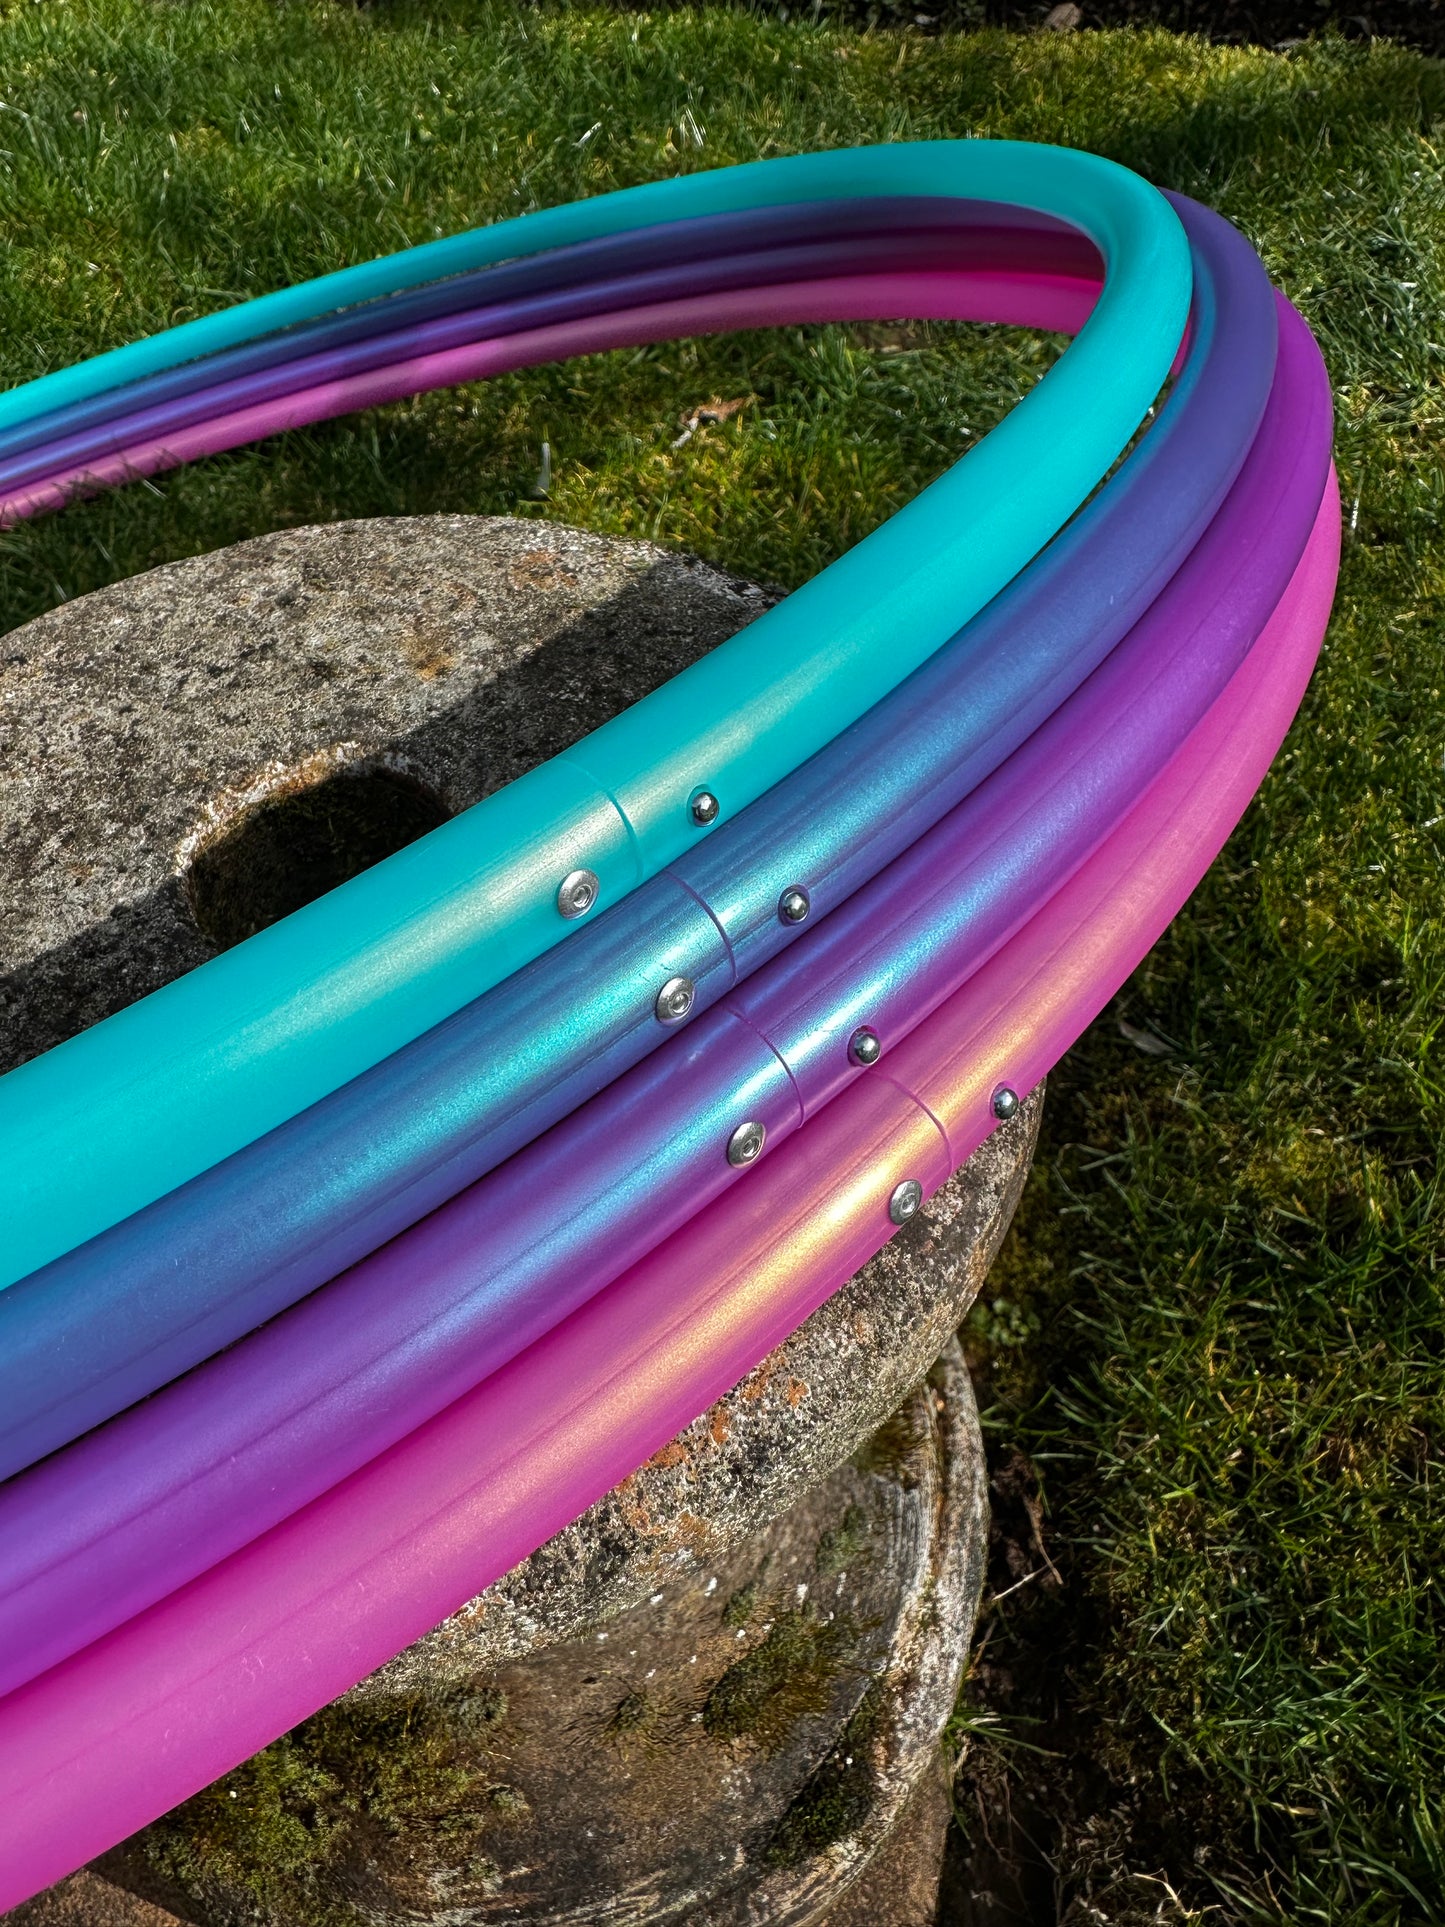 3/4 Malibu Teal Color-Shift Colored Polypro Hoops